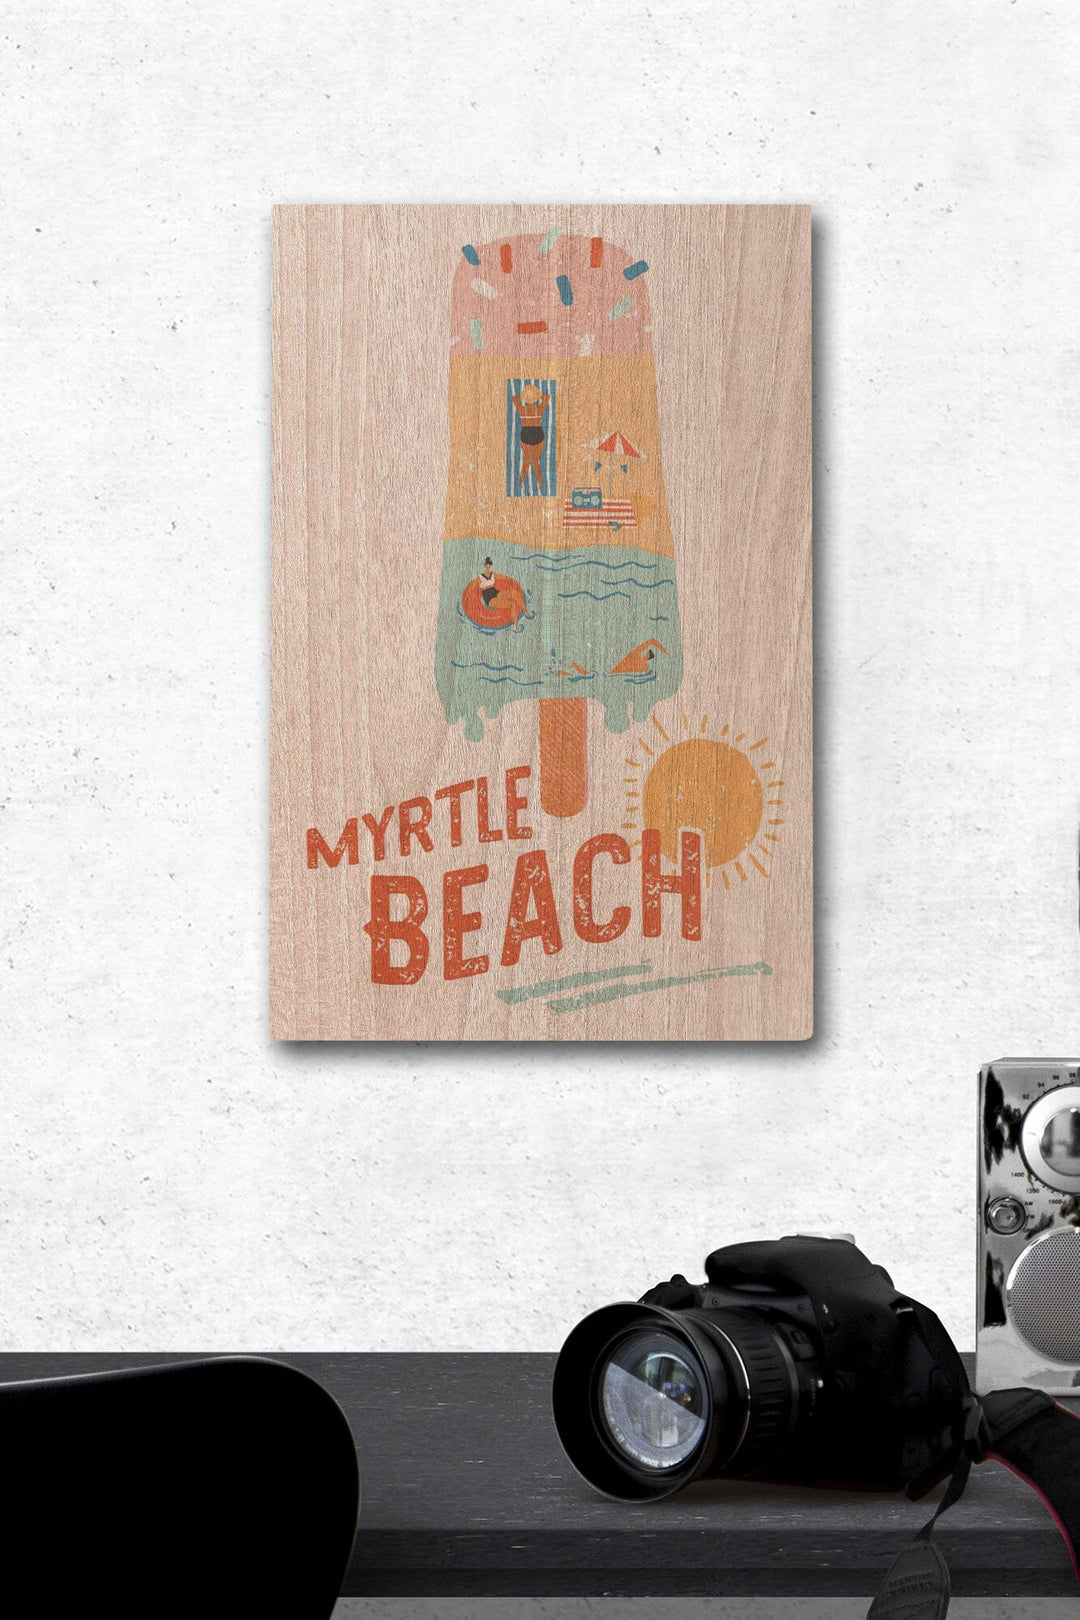 Myrtle Beach, South Carolina, Ice Cream, Lantern Press Artwork, Wood Signs and Postcards Wood Lantern Press 12 x 18 Wood Gallery Print 